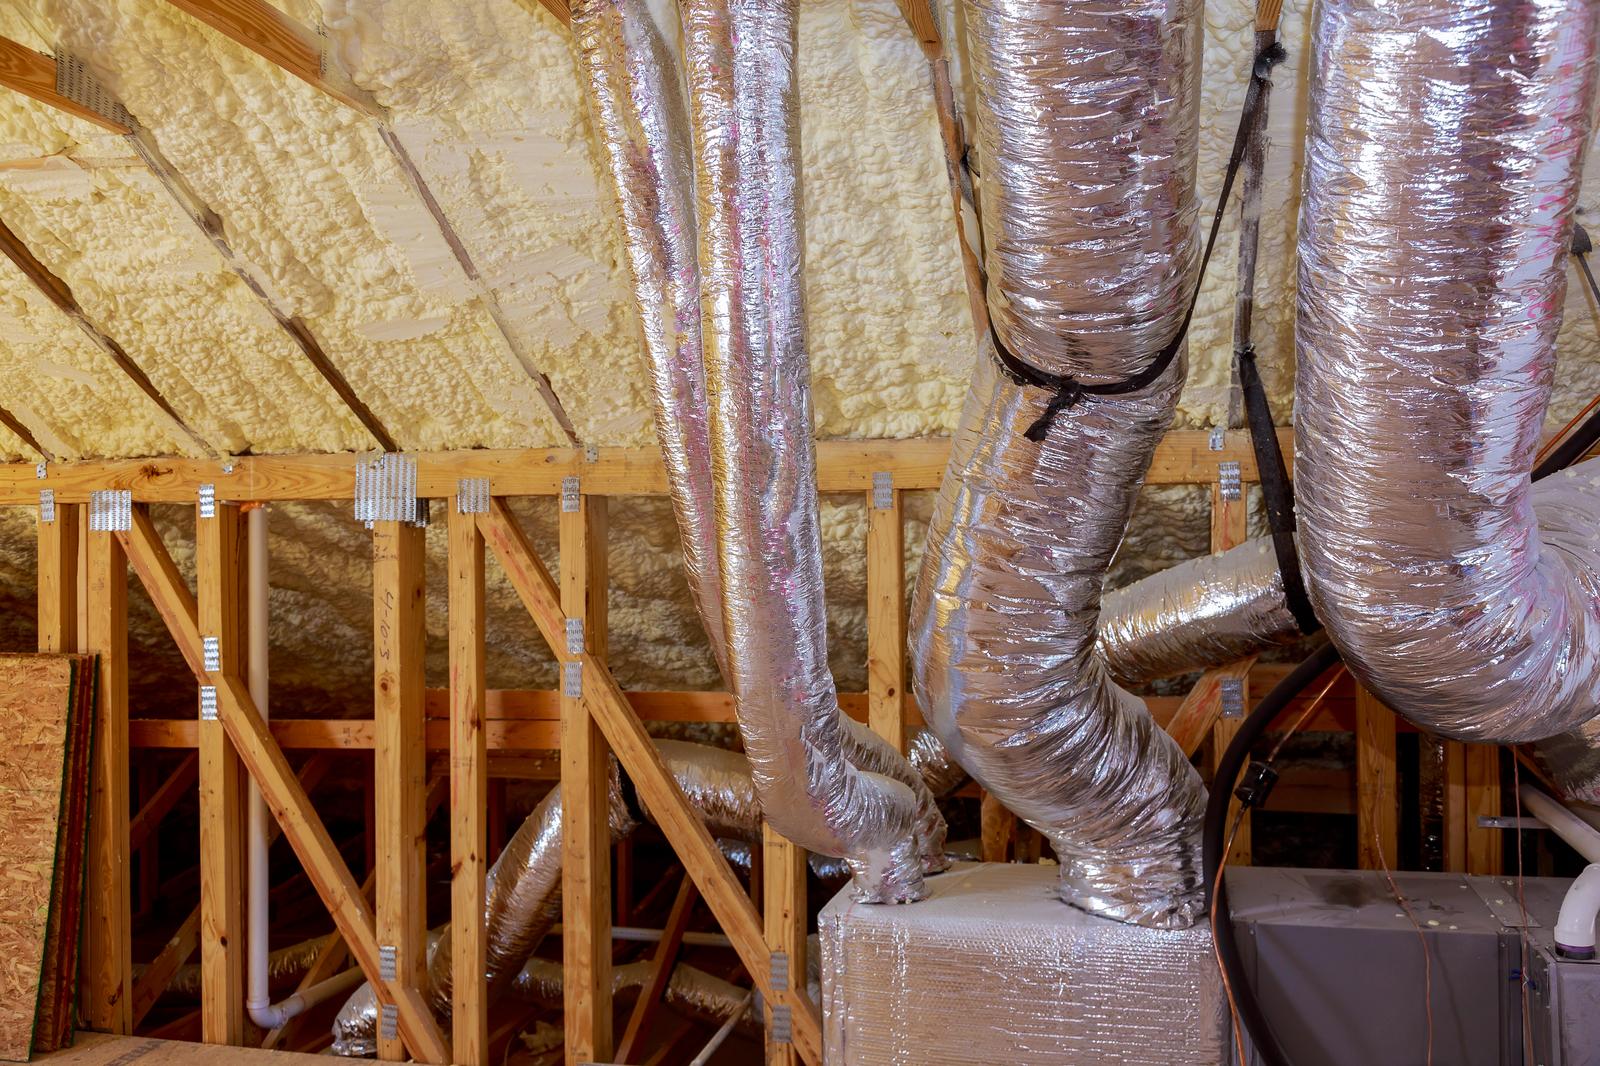 TALMALI OÜ - Plumbing, heat and air-conditioning installation in Kunda